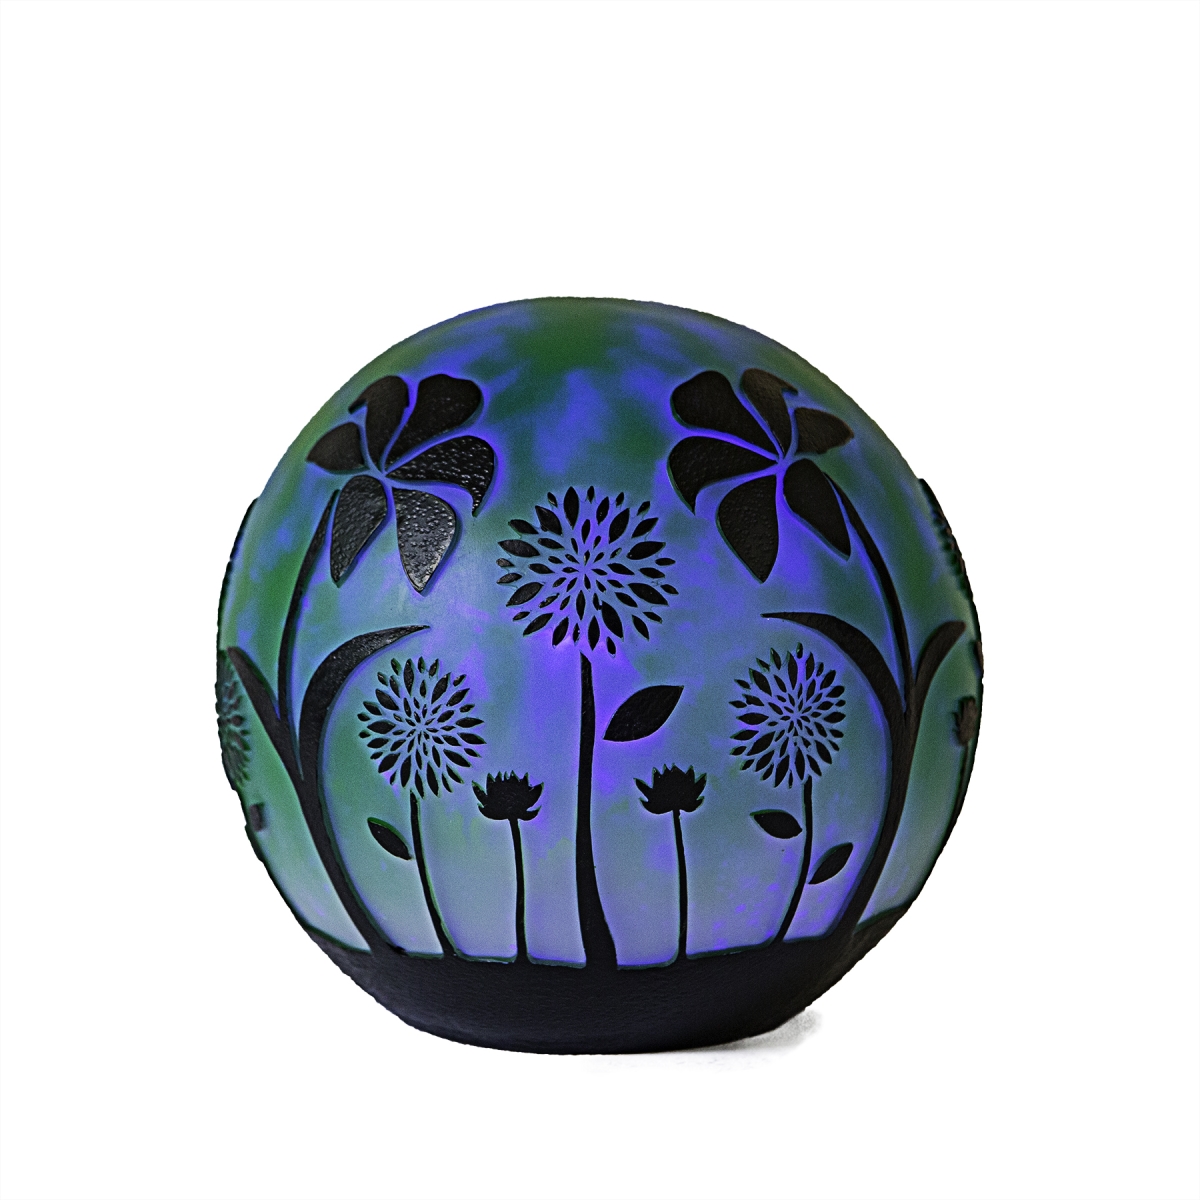 5505 Garden Gazing Globe Ball, Floral - Green